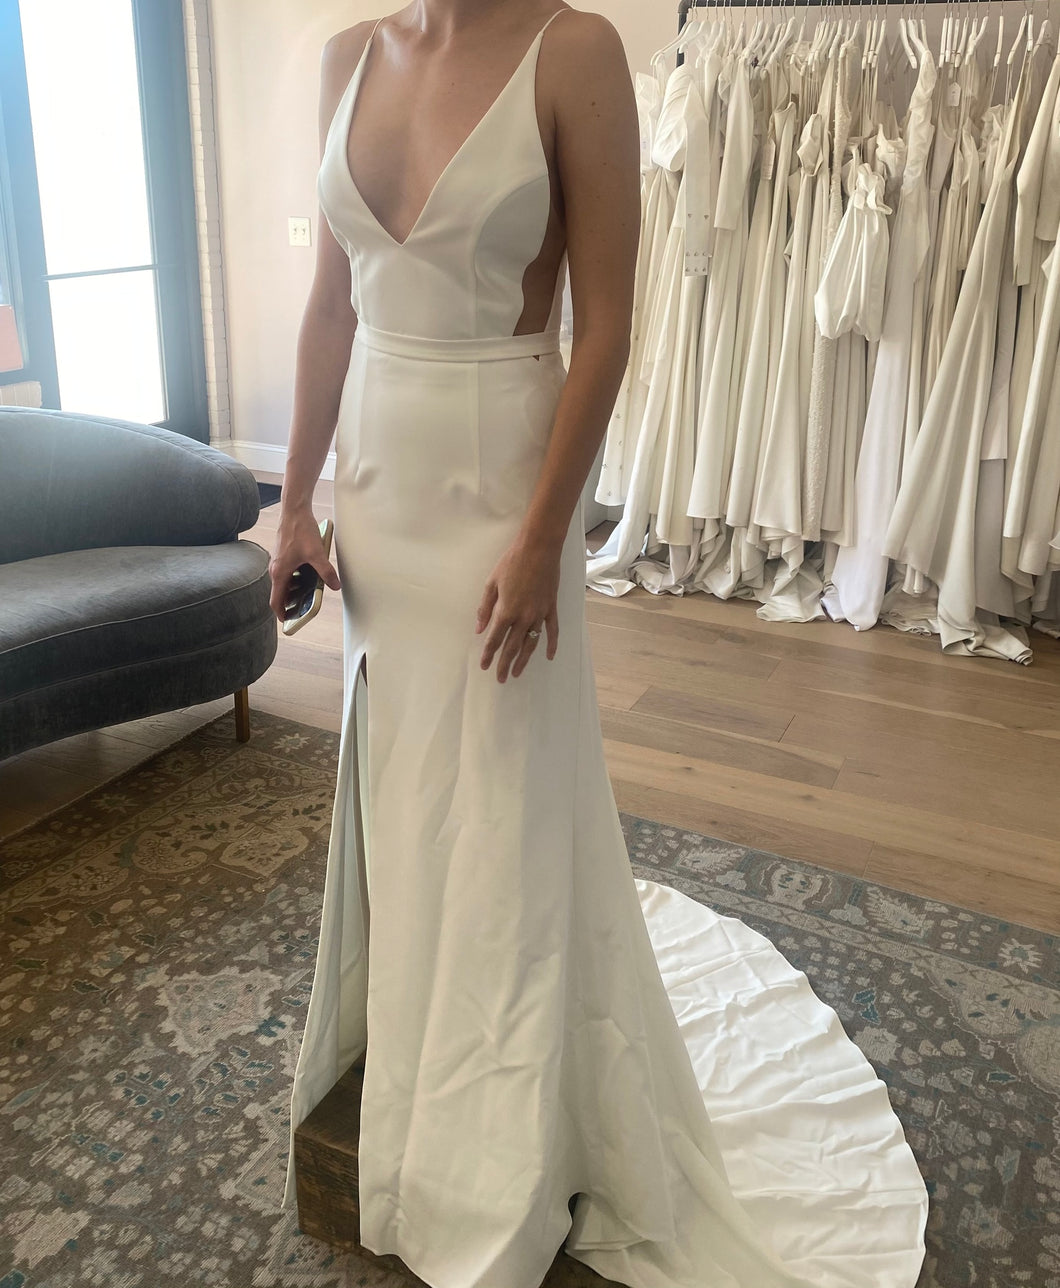 Sarah Seven 'Giovanna ' wedding dress size-04 NEW